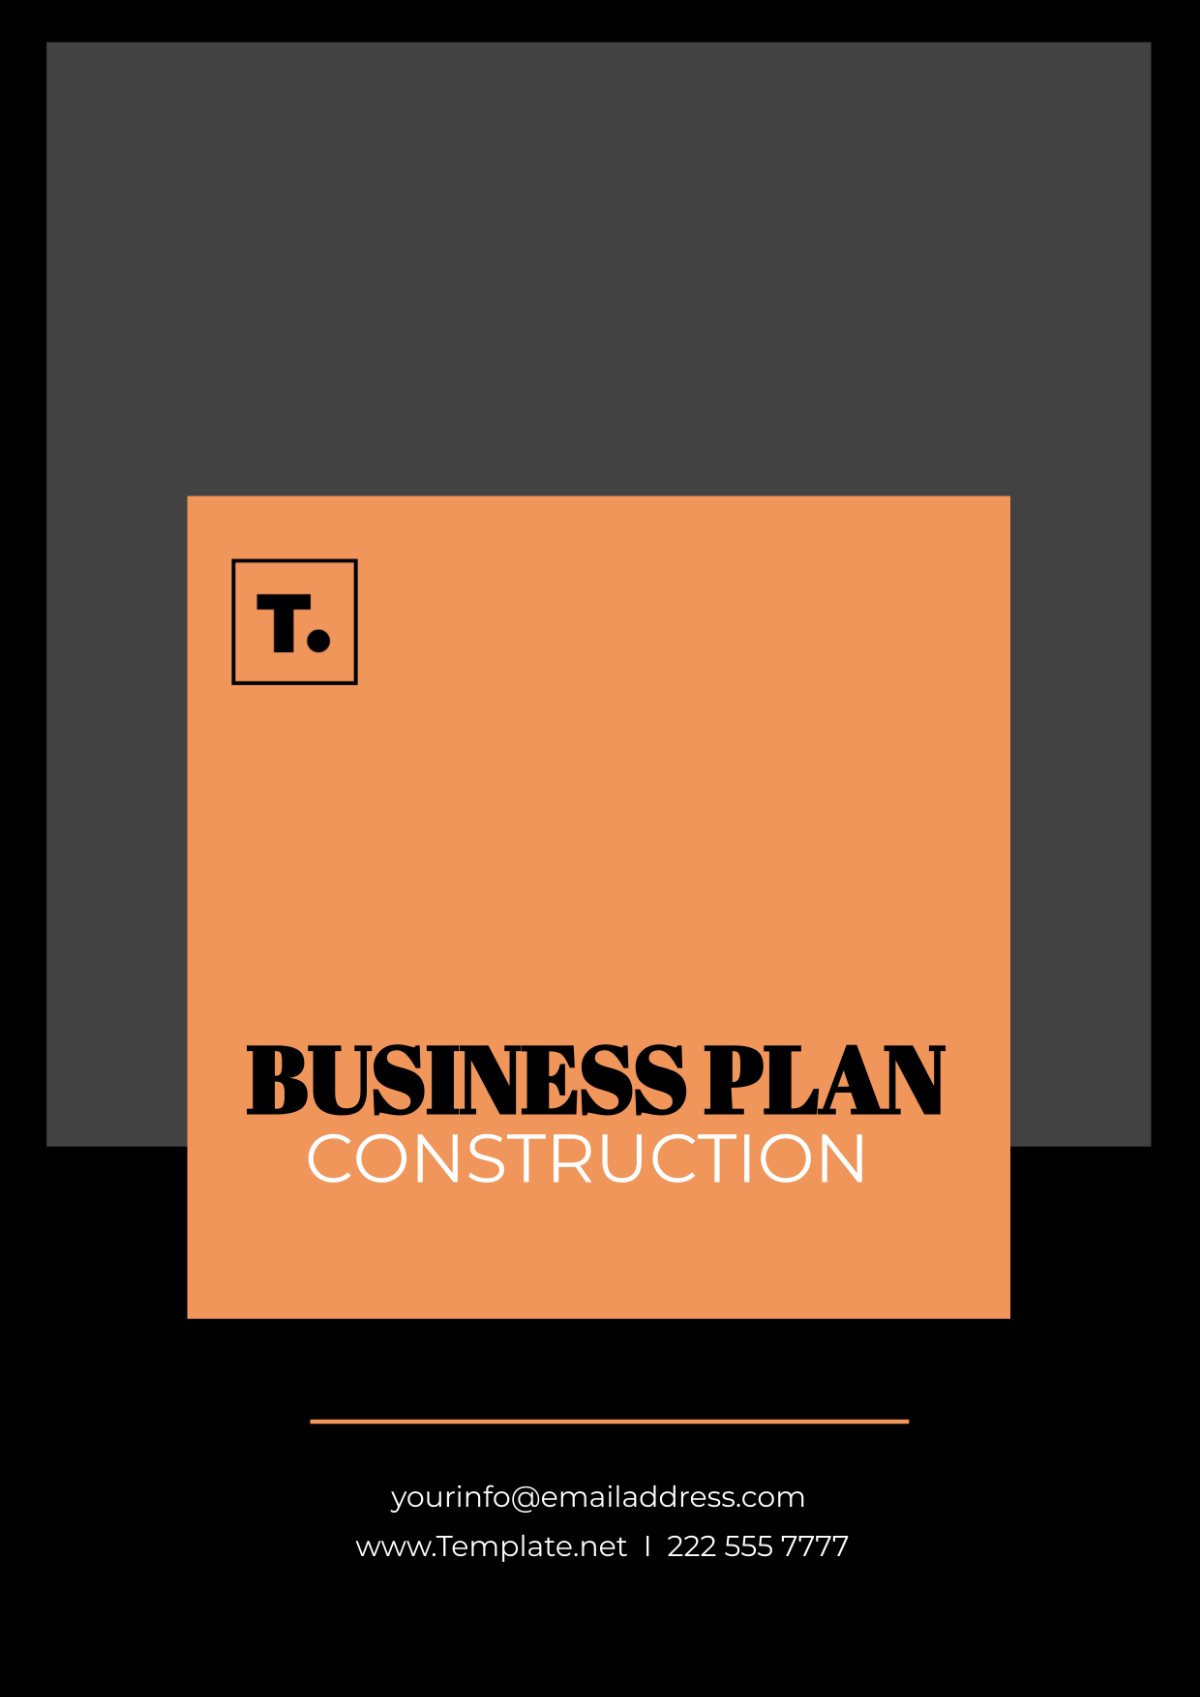 Construction Business Plan Template